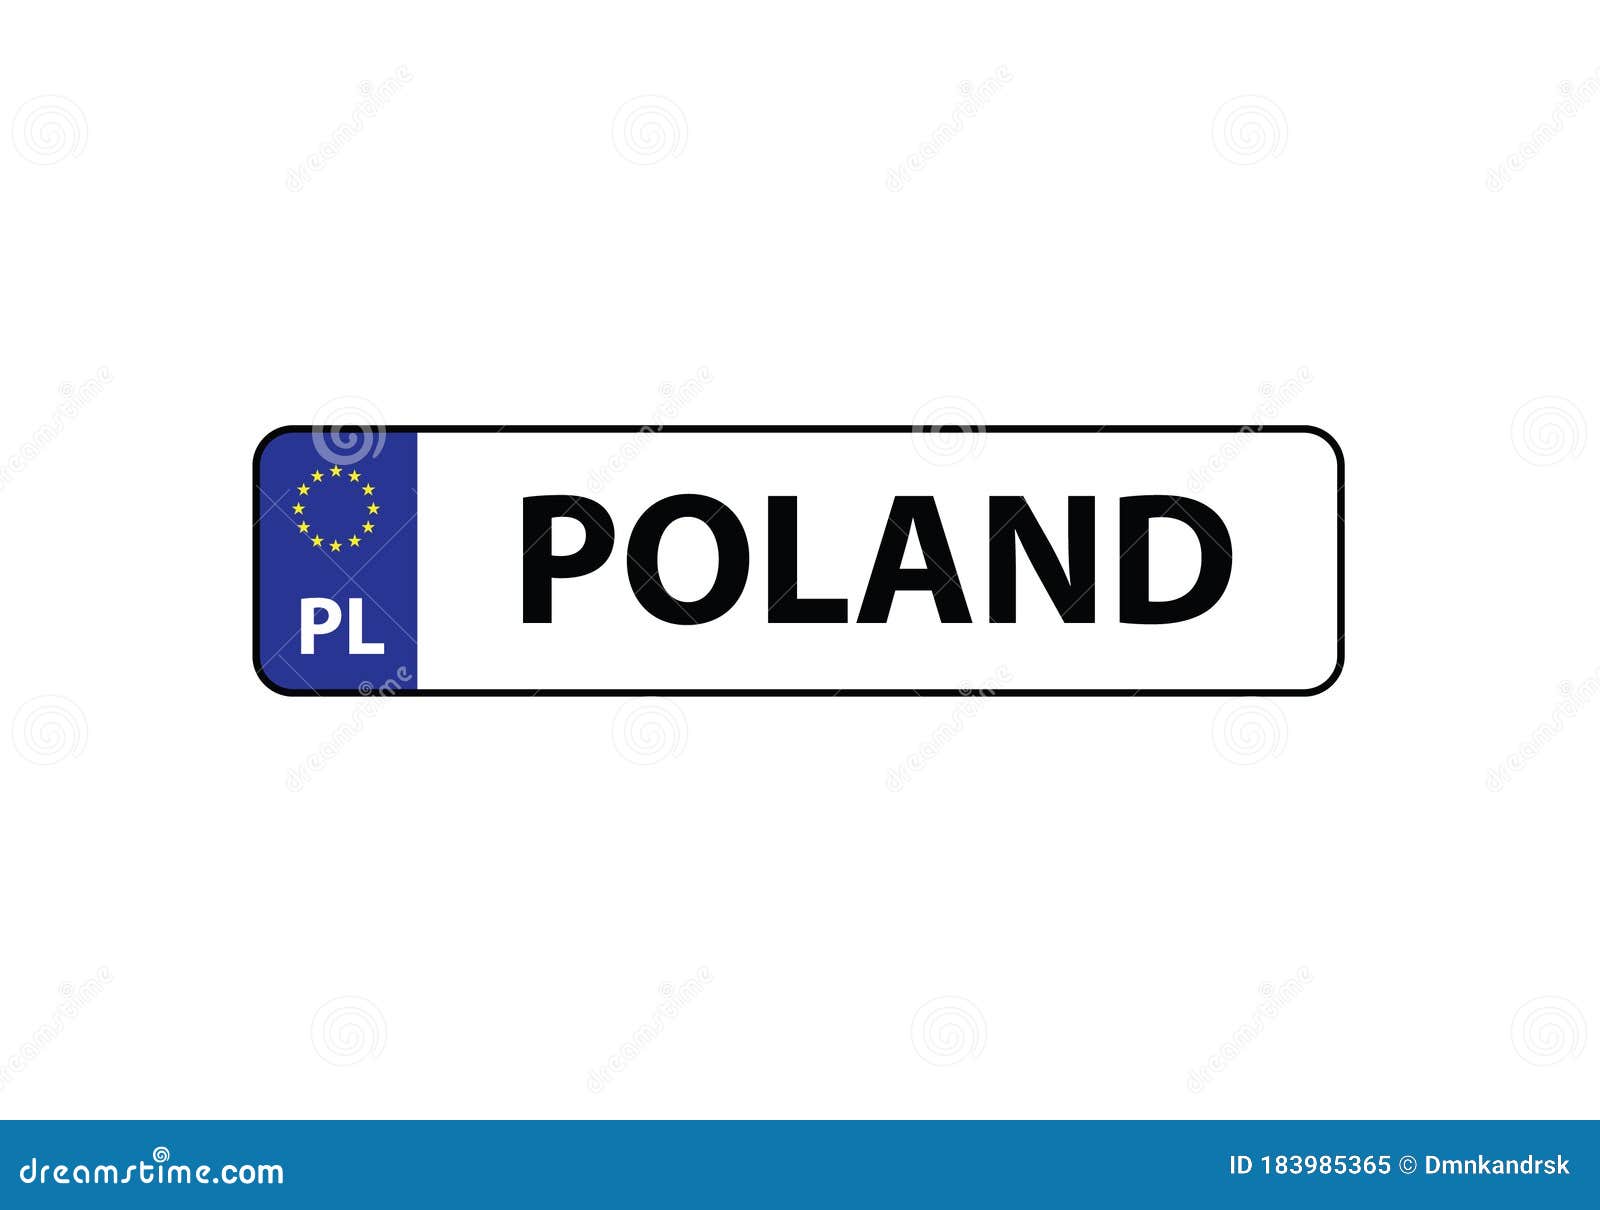 Poland License Plate Car Motor Vehicle Stock Vector - Illustration